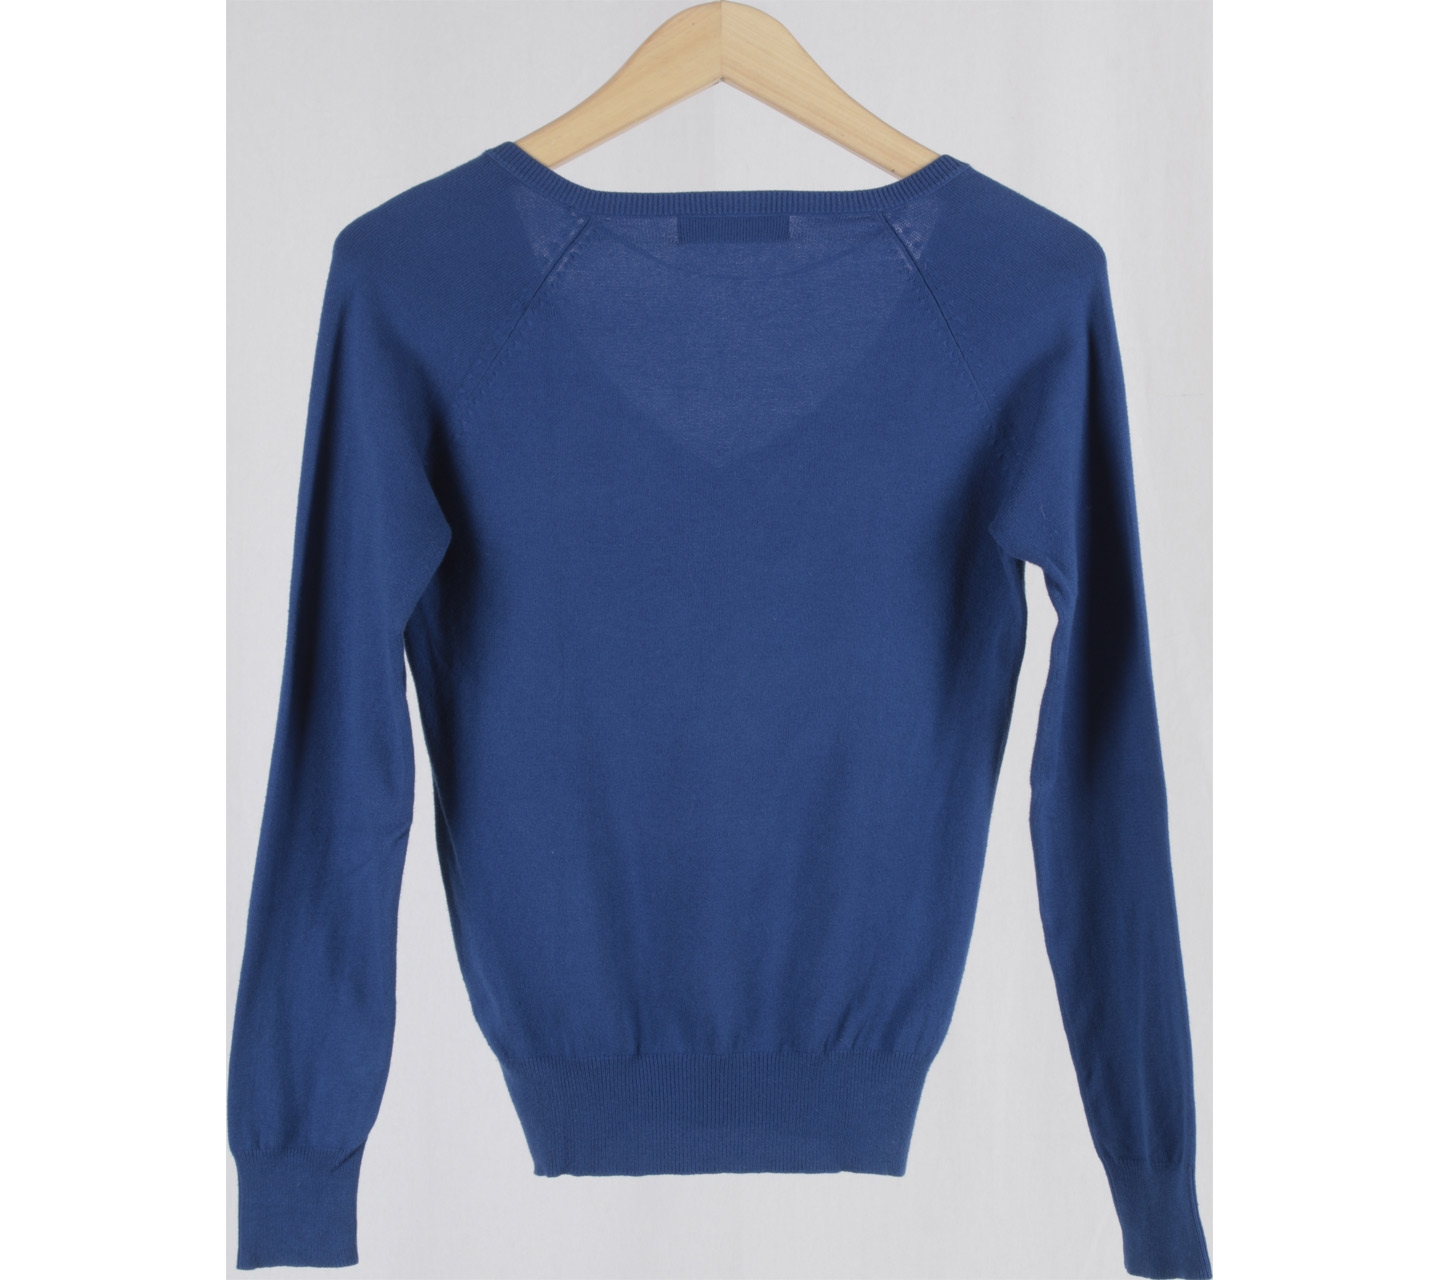 Zara Blue Sweater